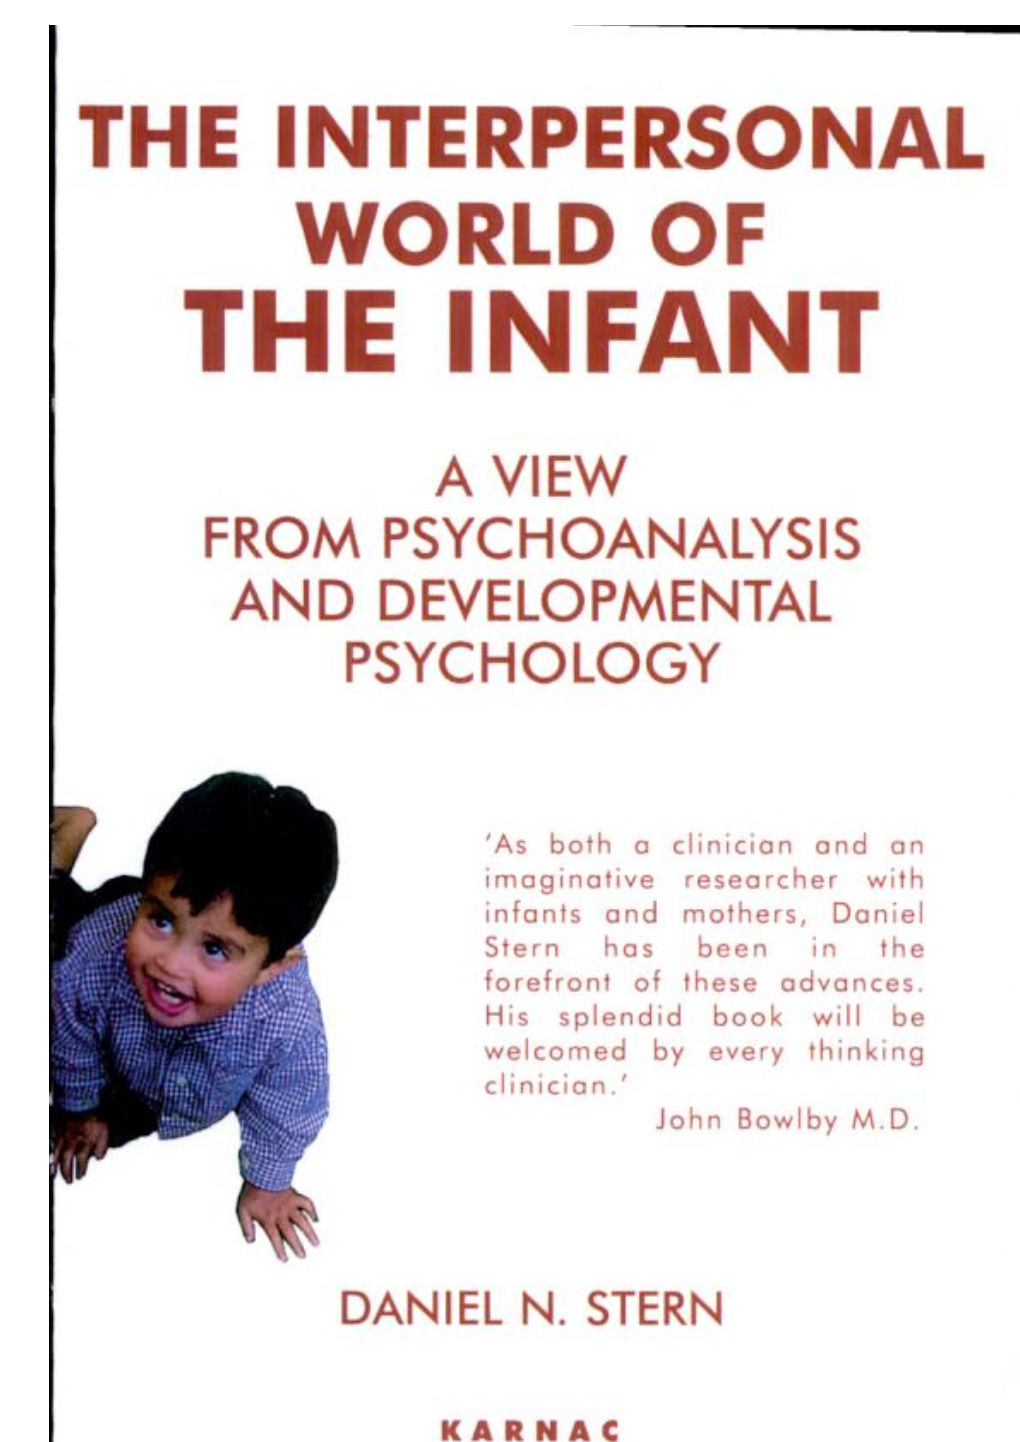 A View from Psychoanalysis and Developmental Psychology, Daniel N